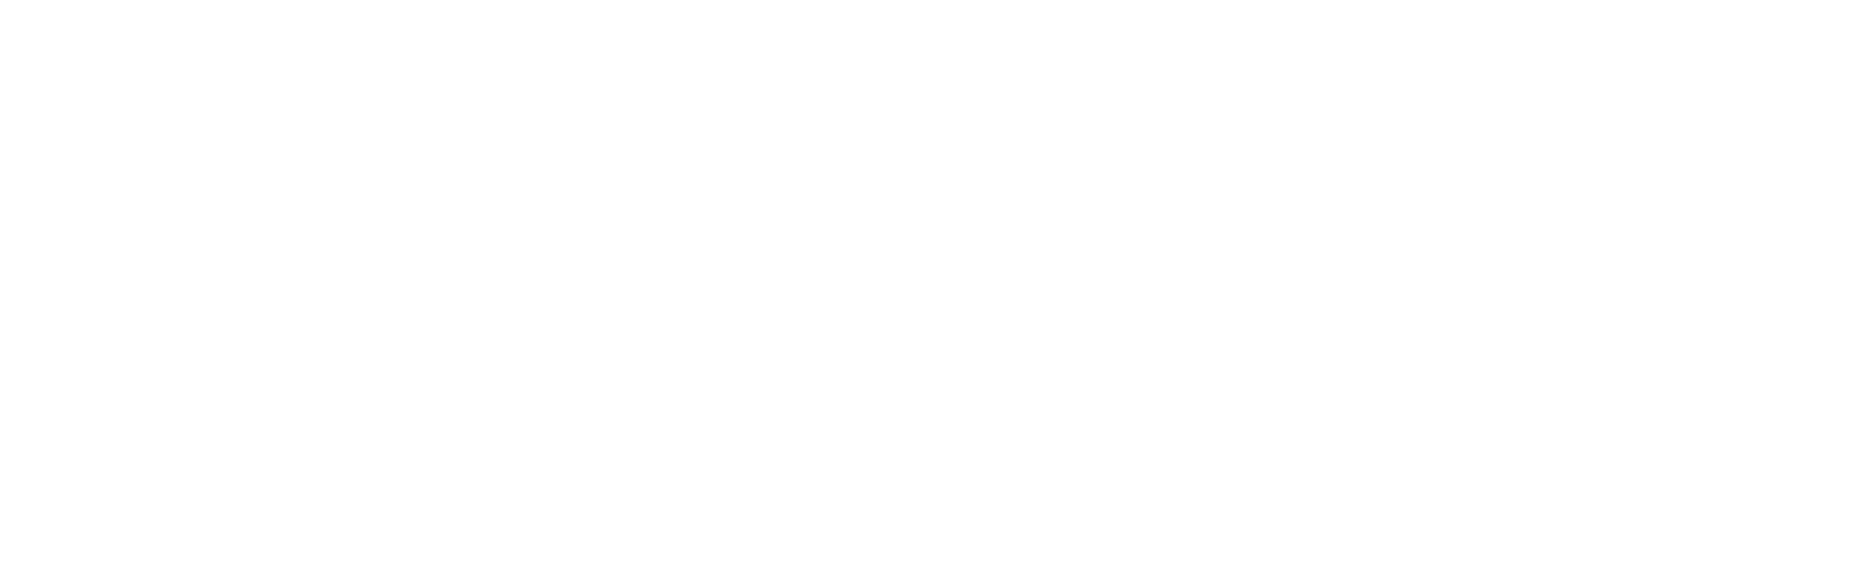 Myanmar Citizens Bank (MCB)